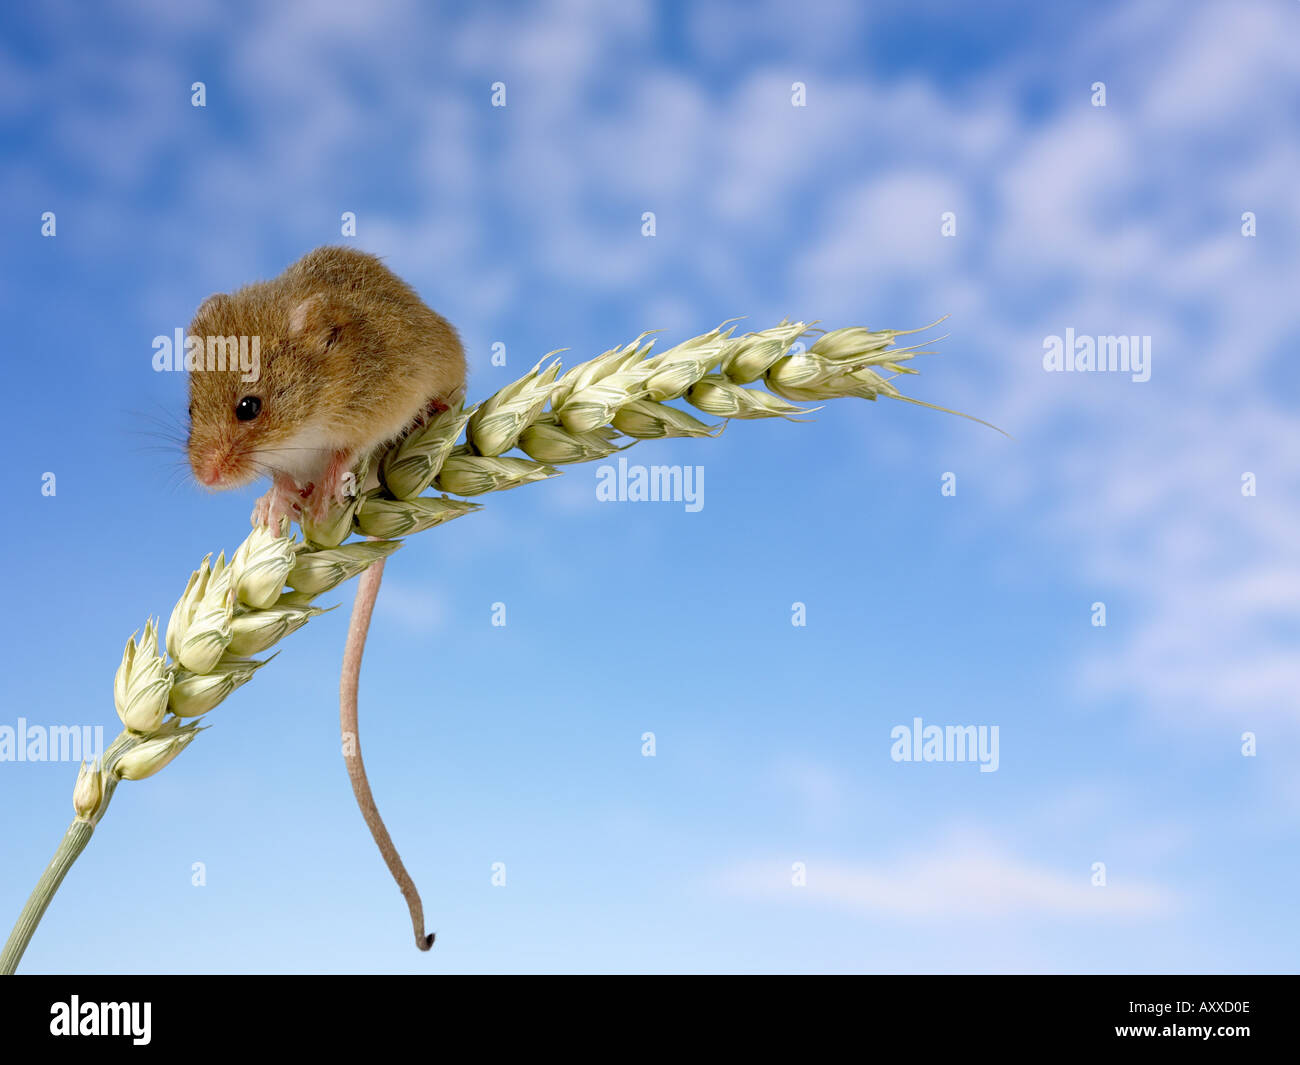 Harvest mouse micromys minutus sulla levetta di mais Foto Stock